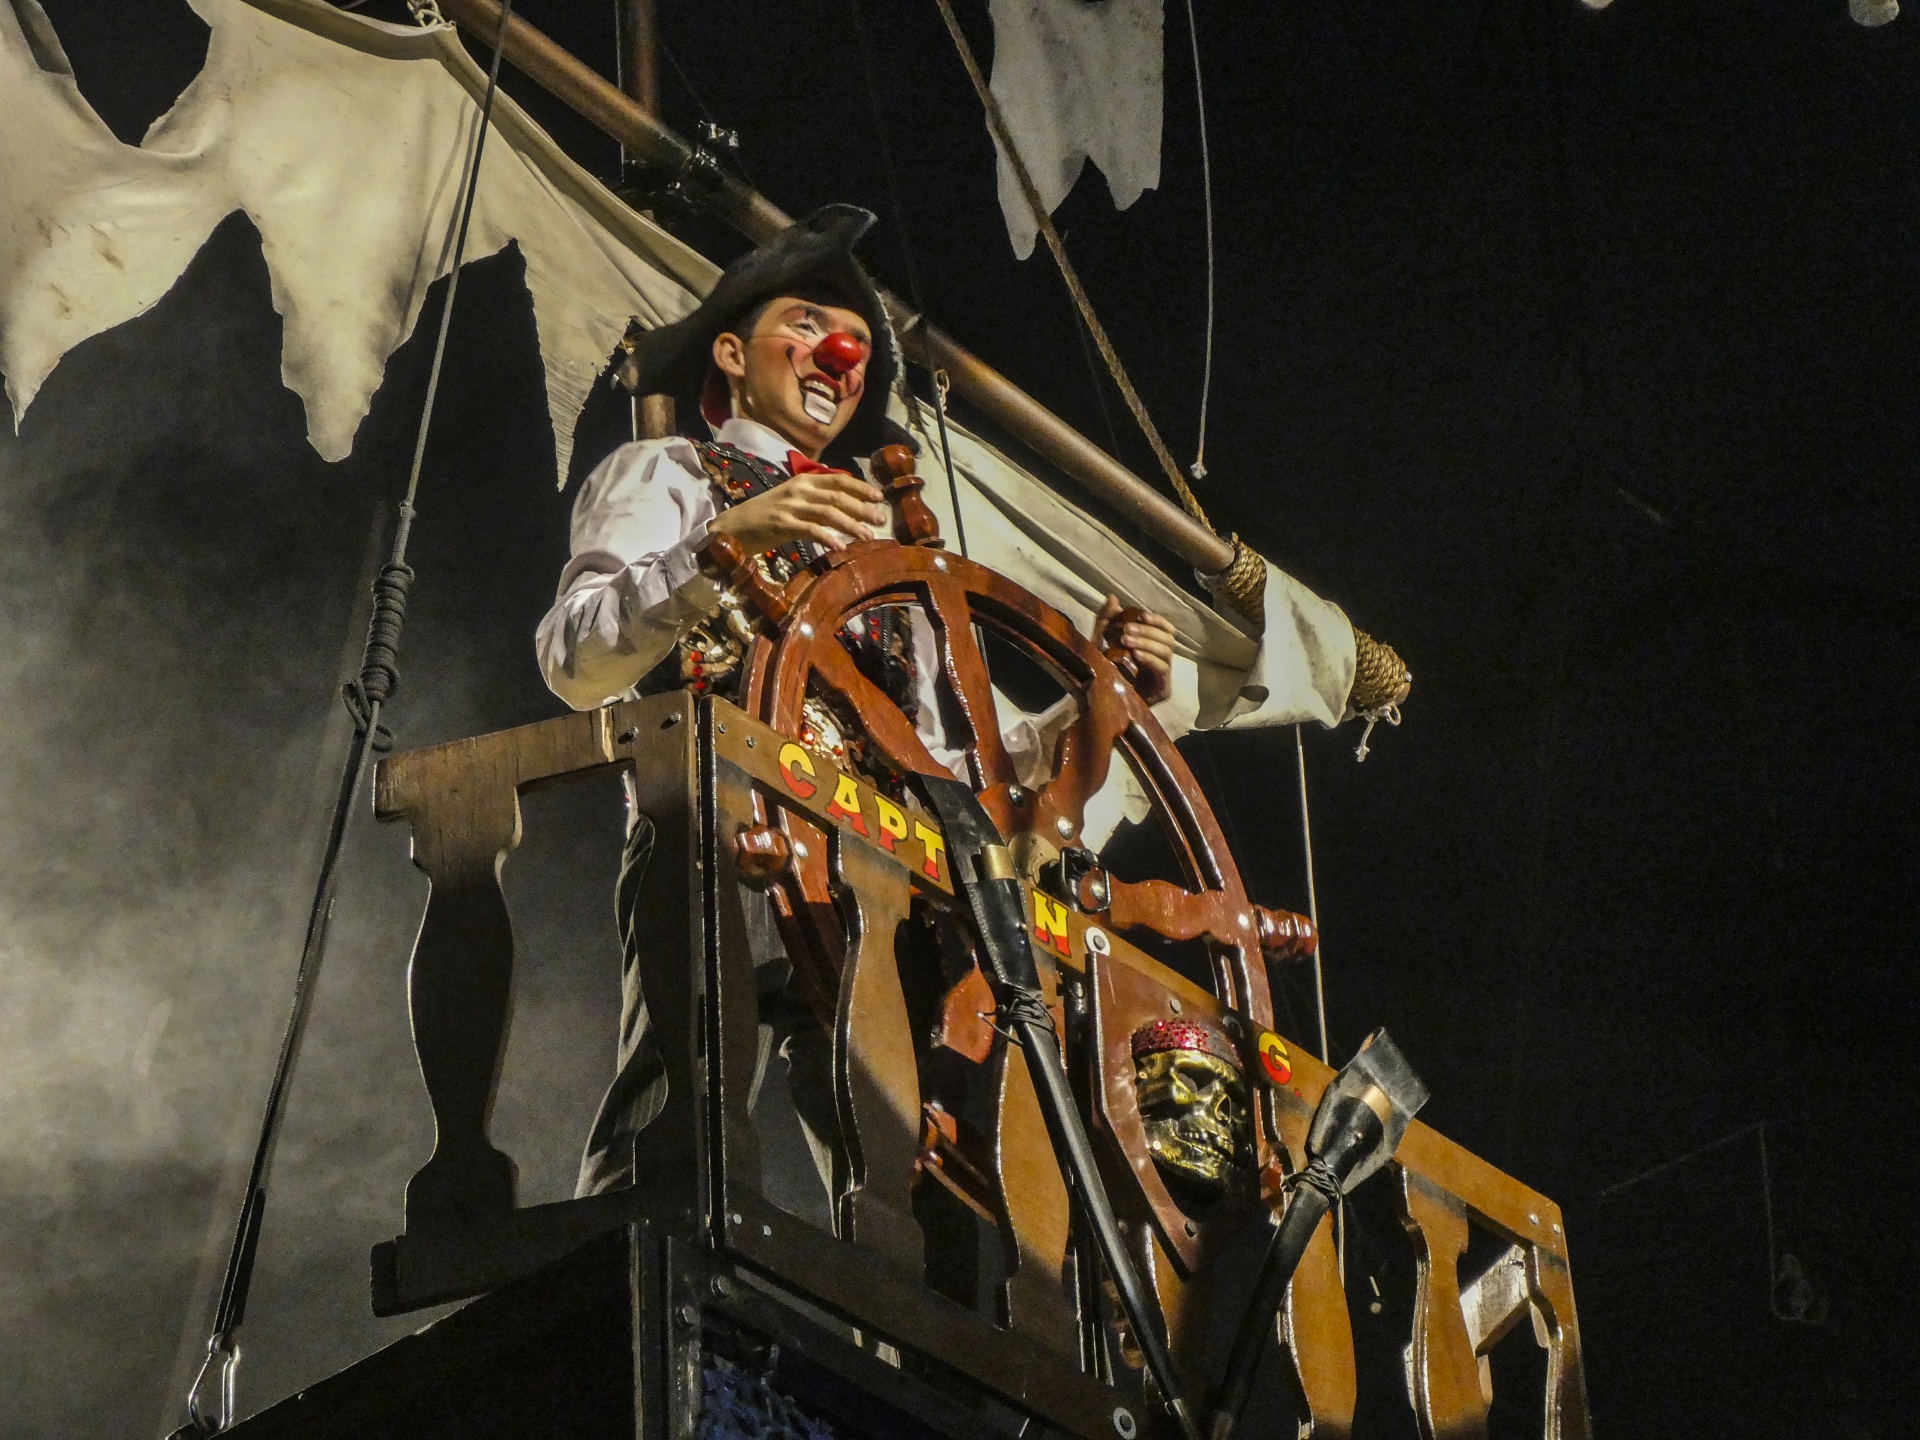 Circus Vargus Pirate steering the vessel